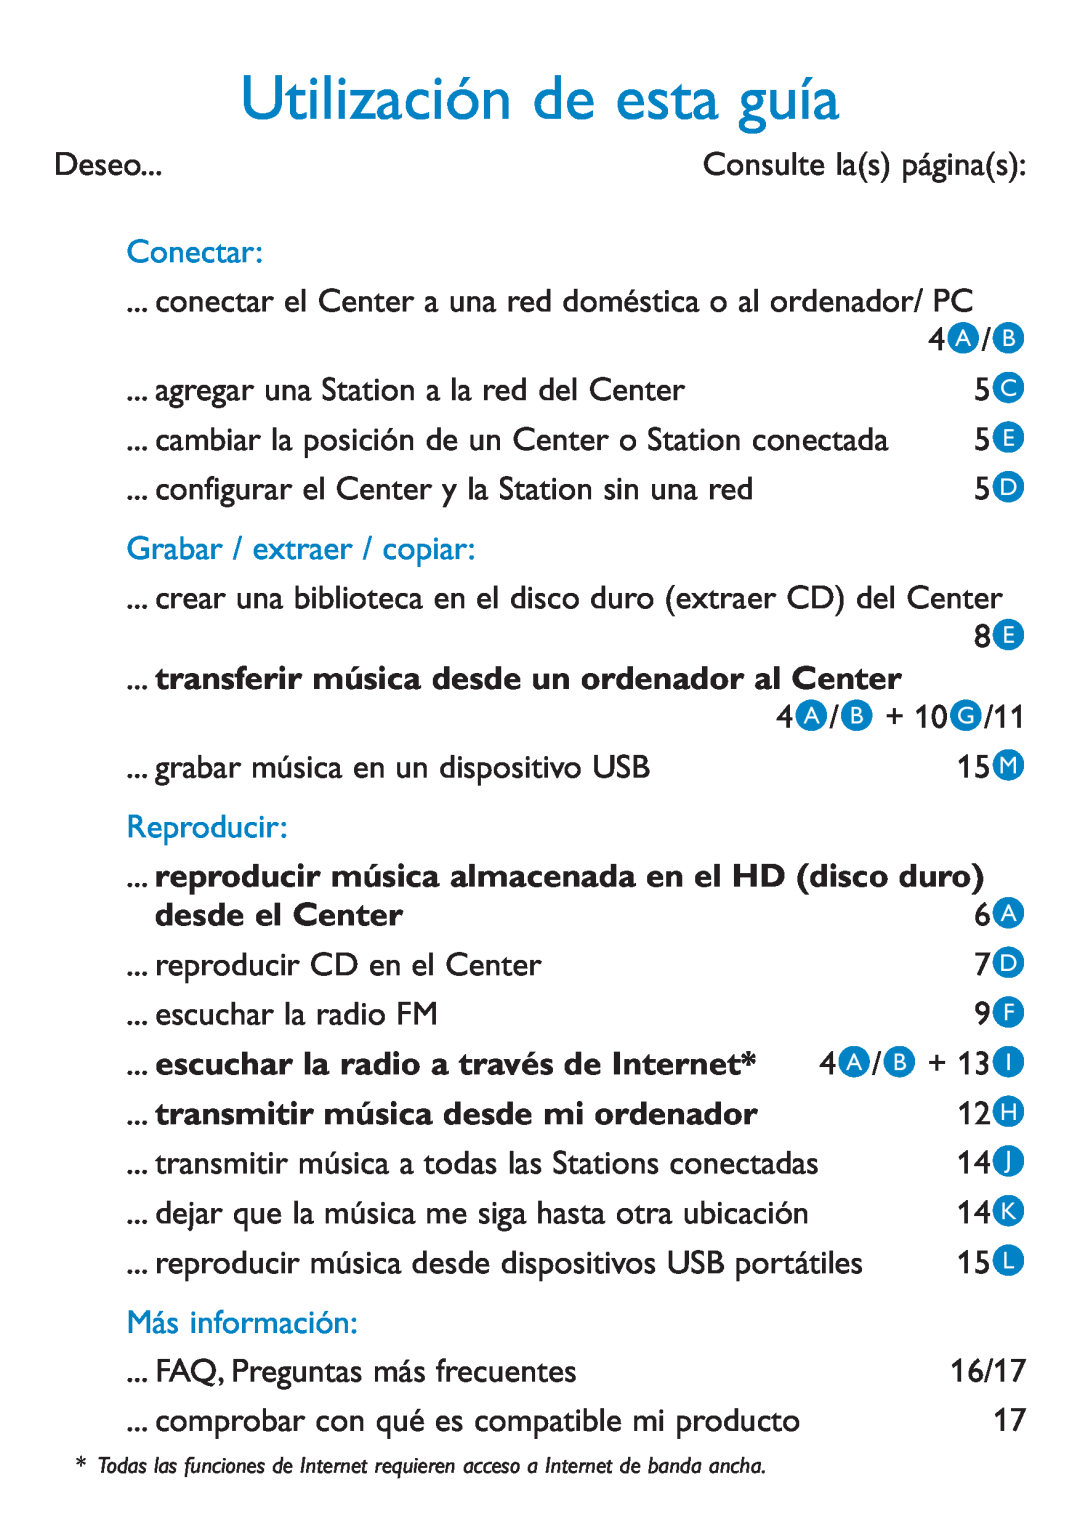 Philips WACS7500 manual Utilización de esta guía, Conectar, Grabar / extraer / copiar, Reproducir, Más información 